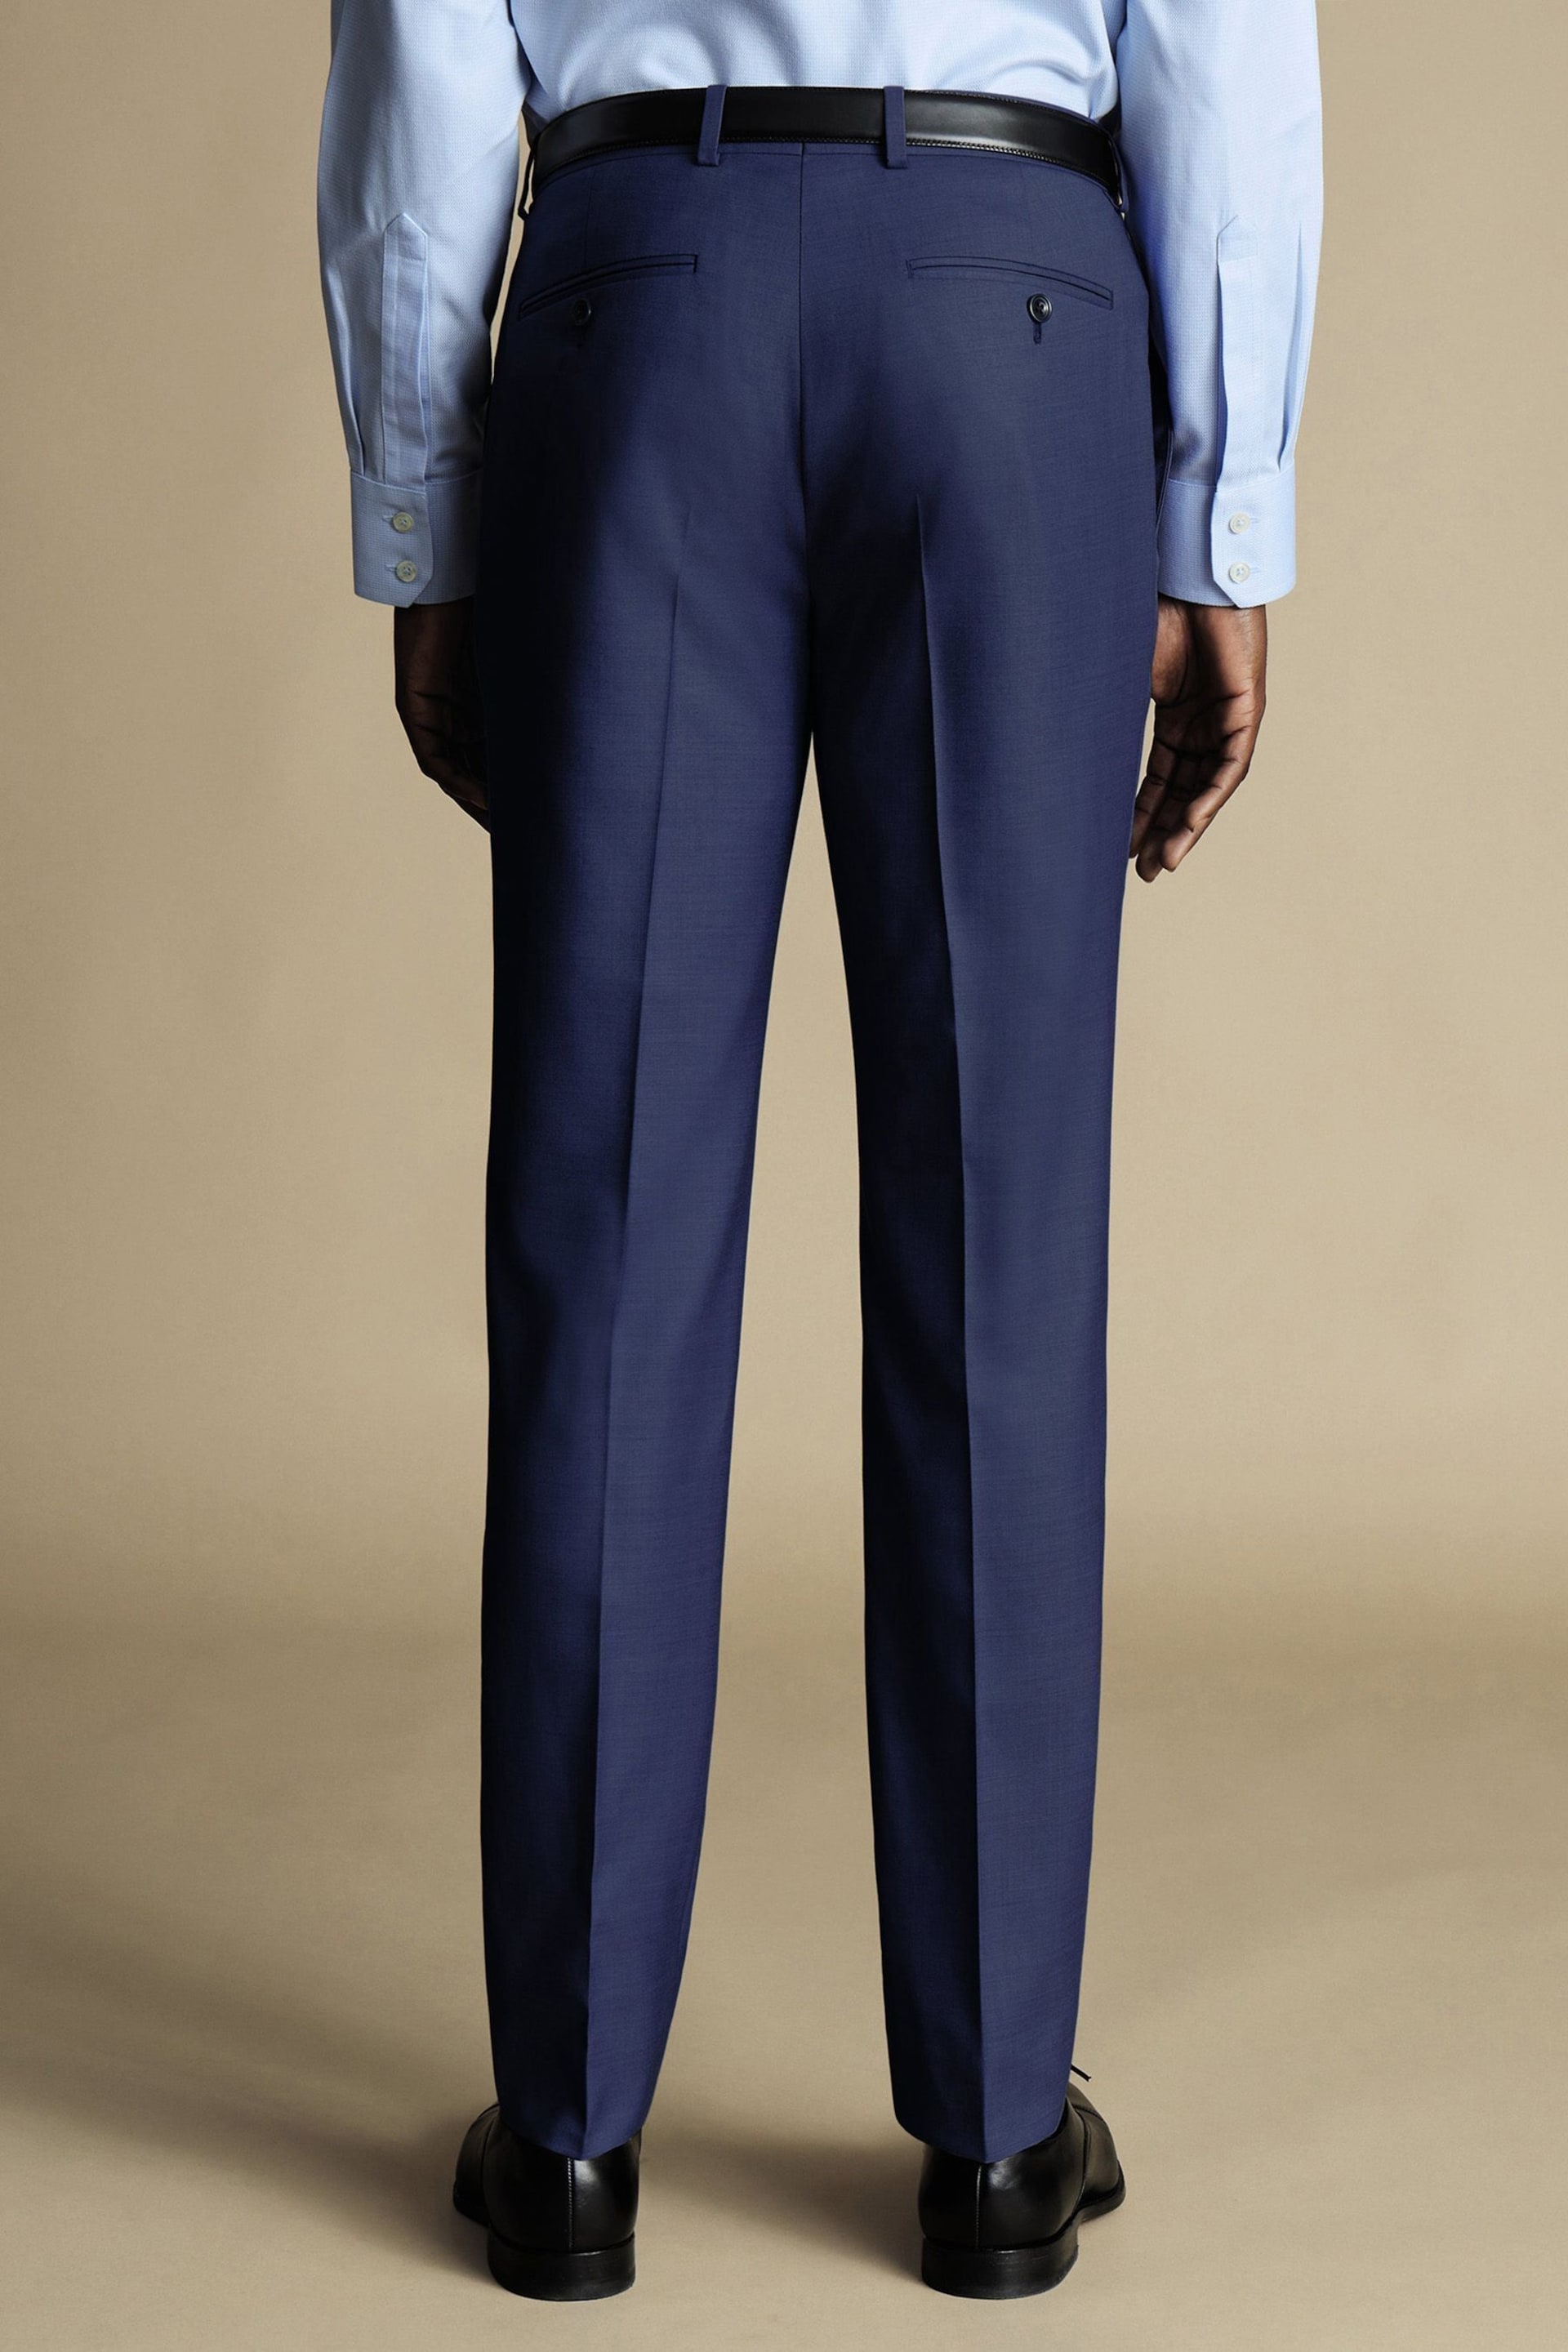 Charles Tyrwhitt Blue Slim Fit Sharkskin Ultimate Performance Suit Trousers - Image 2 of 3